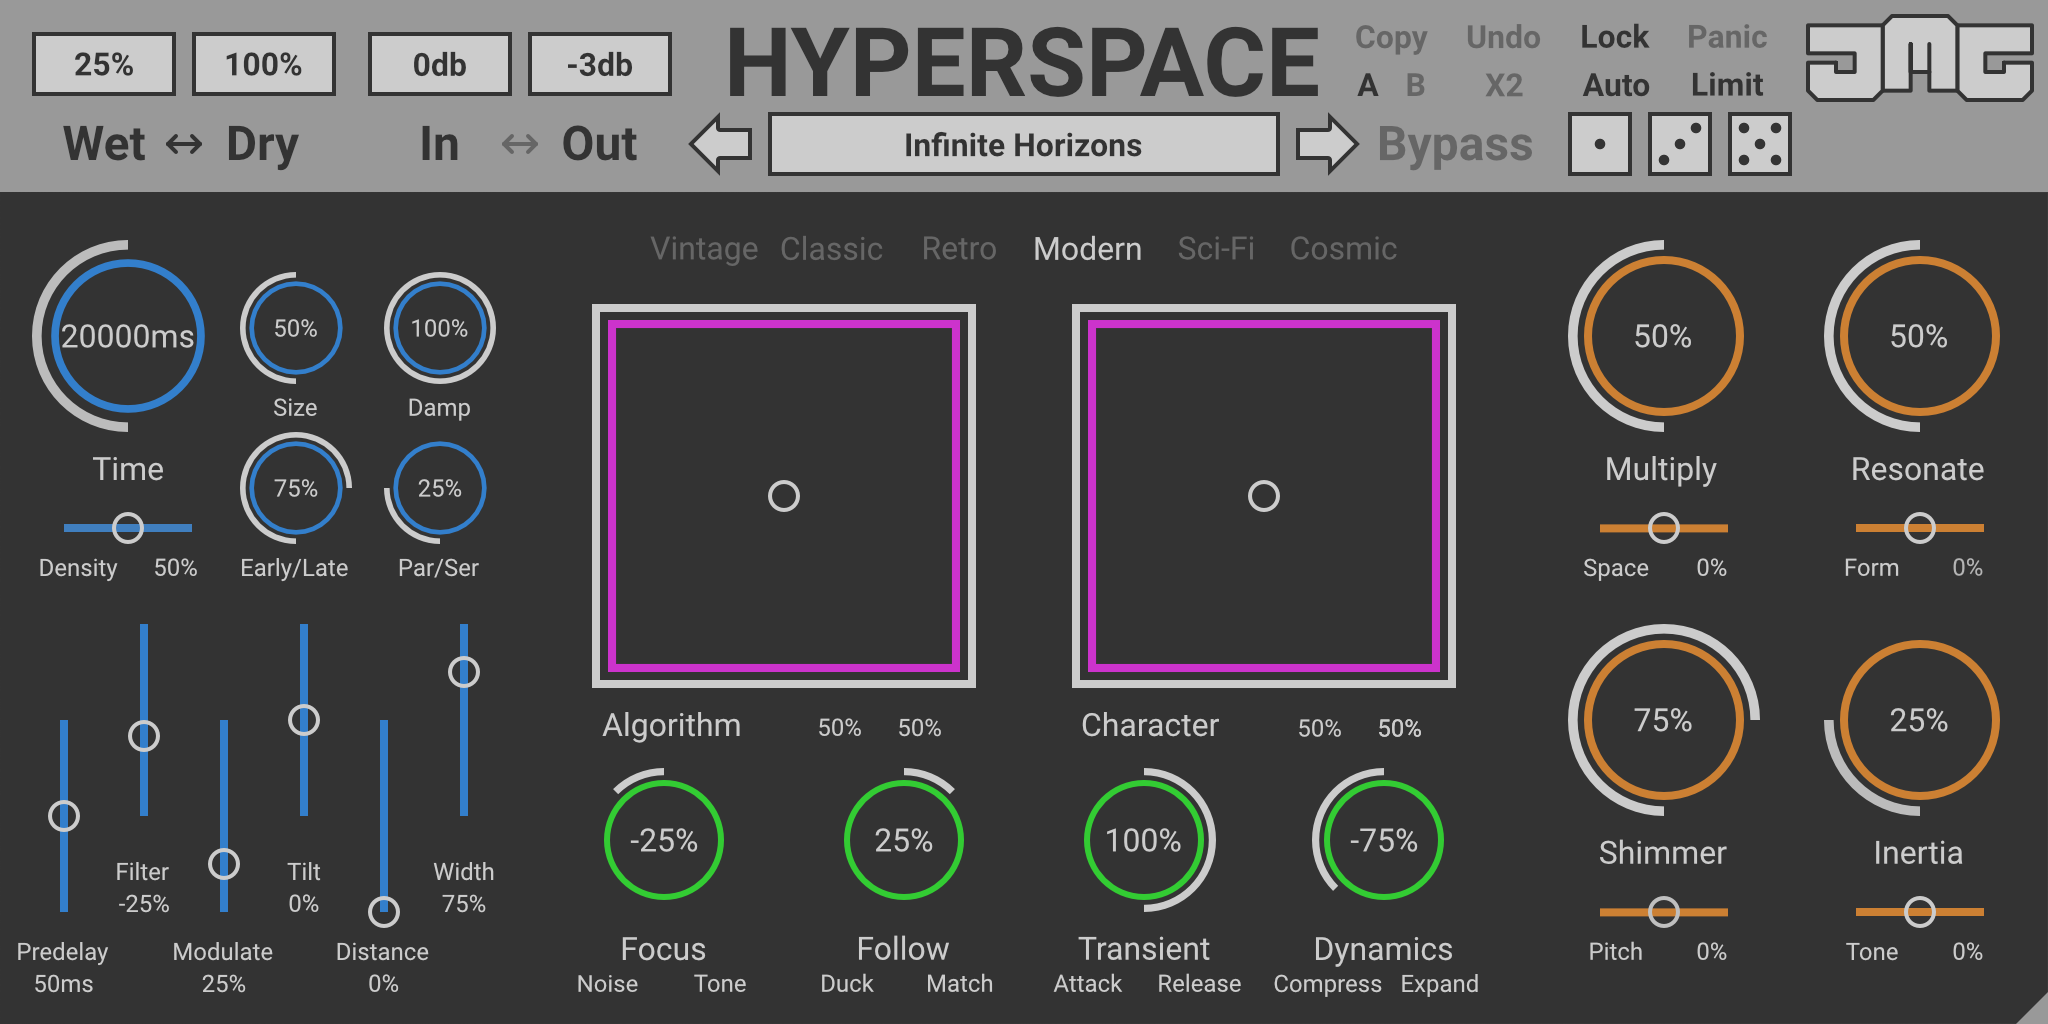 Hyperspace by JMG Sound